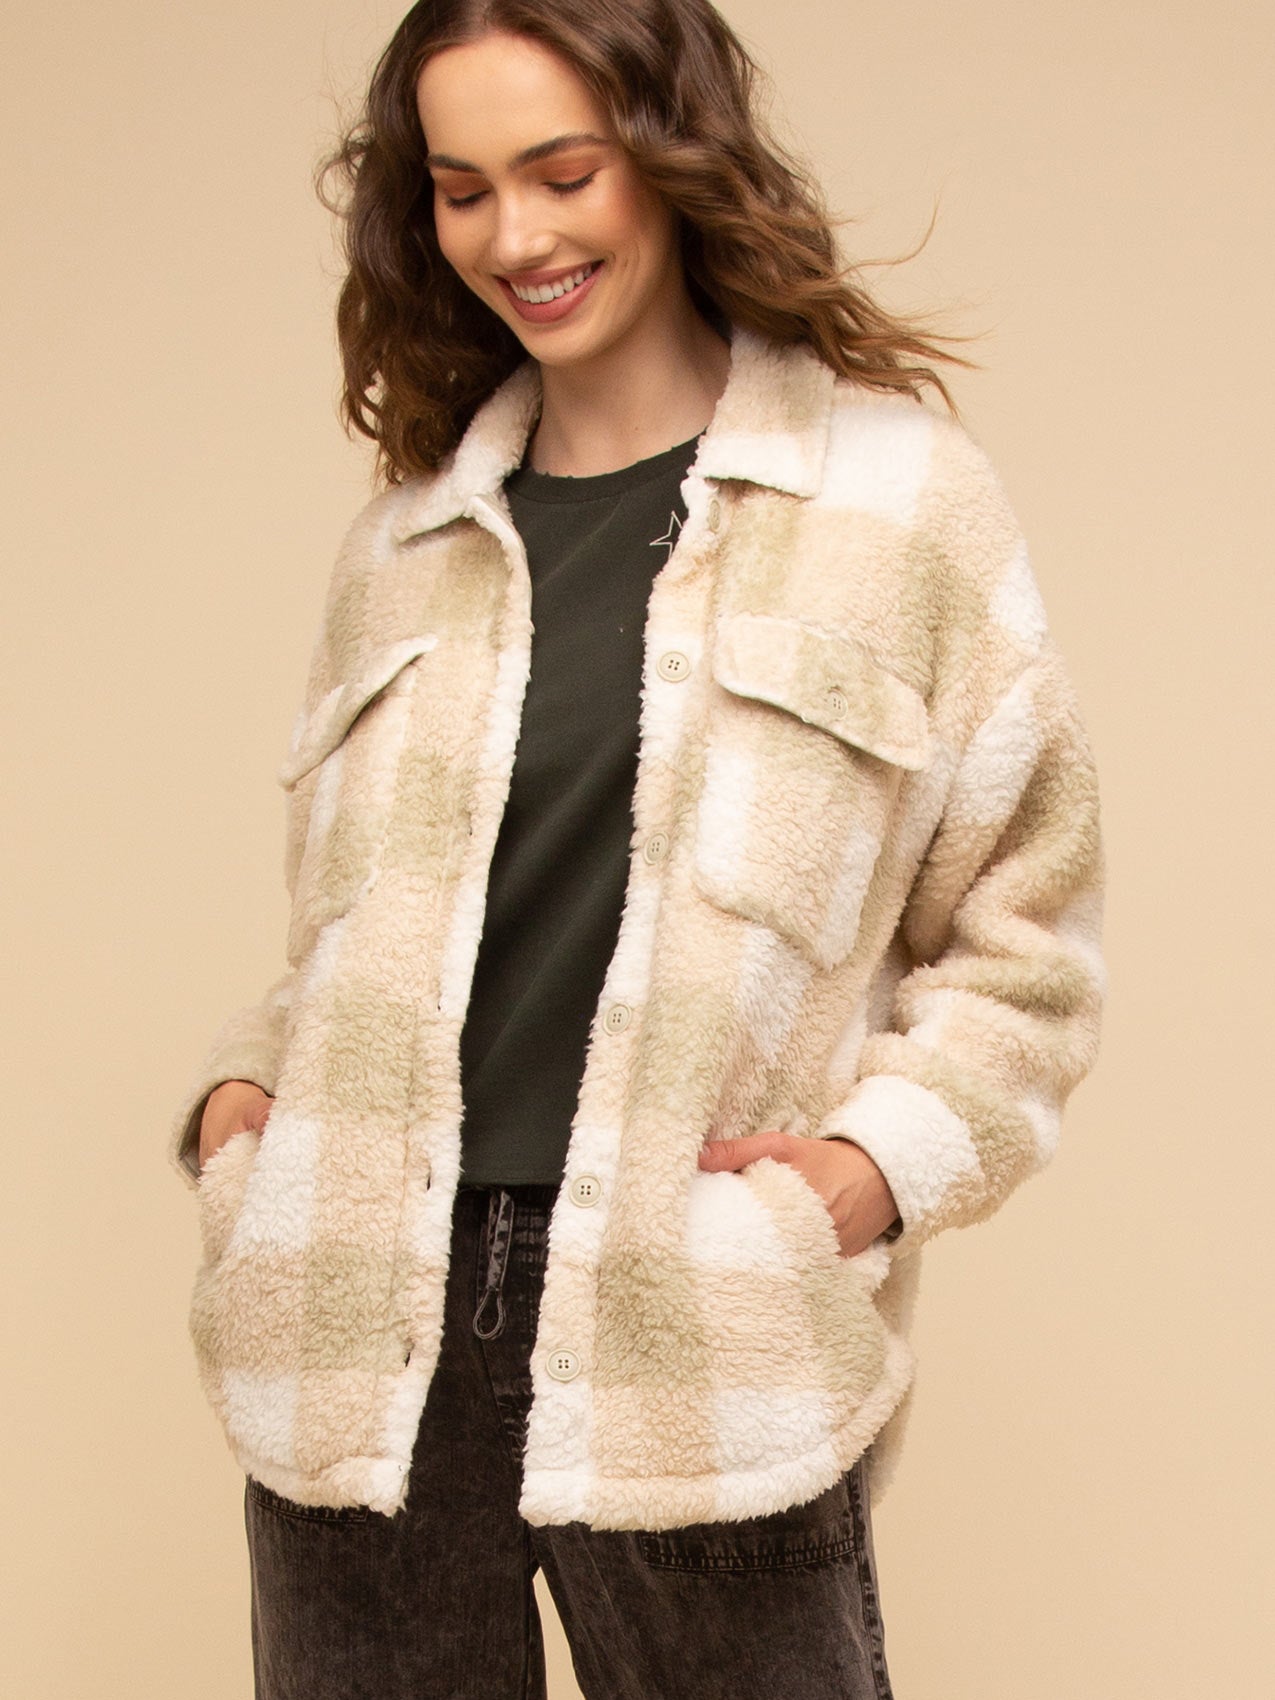 Marquette Jacket, Cozy Sherpa Sweater